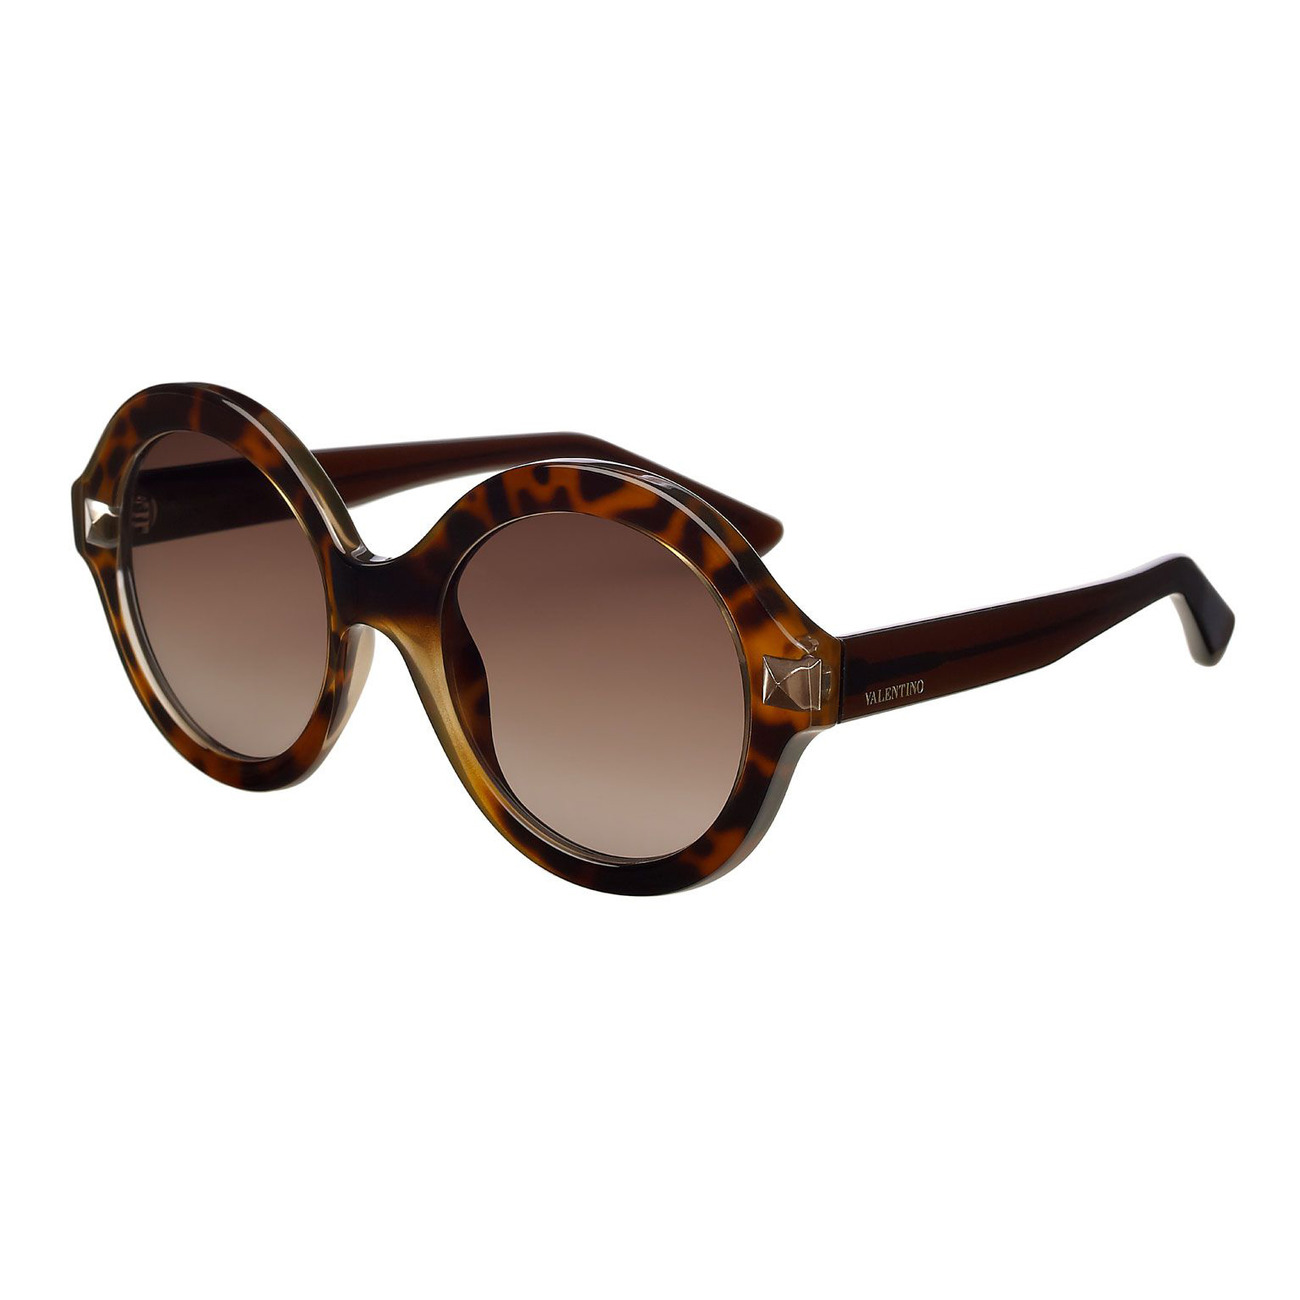 Valentino 'Caramel' Sunglasses